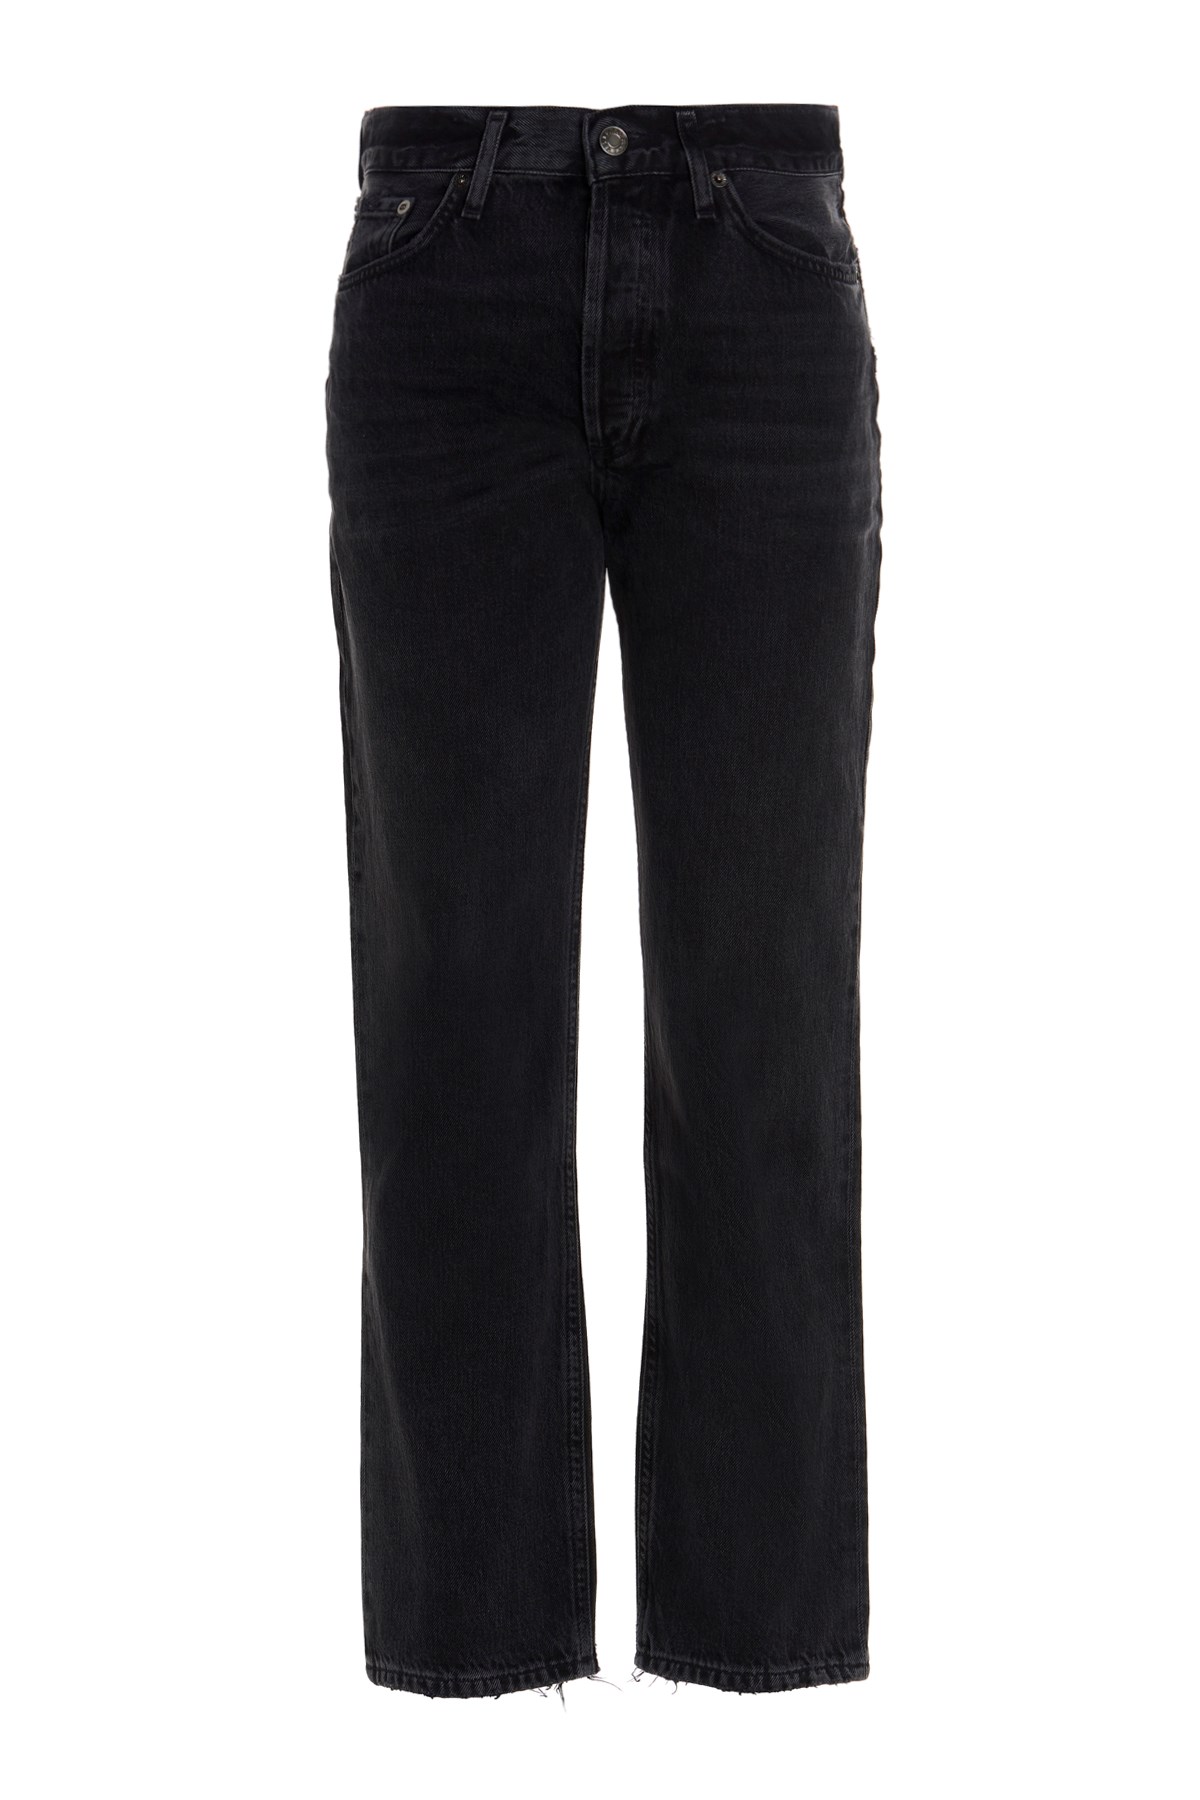 AGOLDE 'Lana Crop’ Jeans